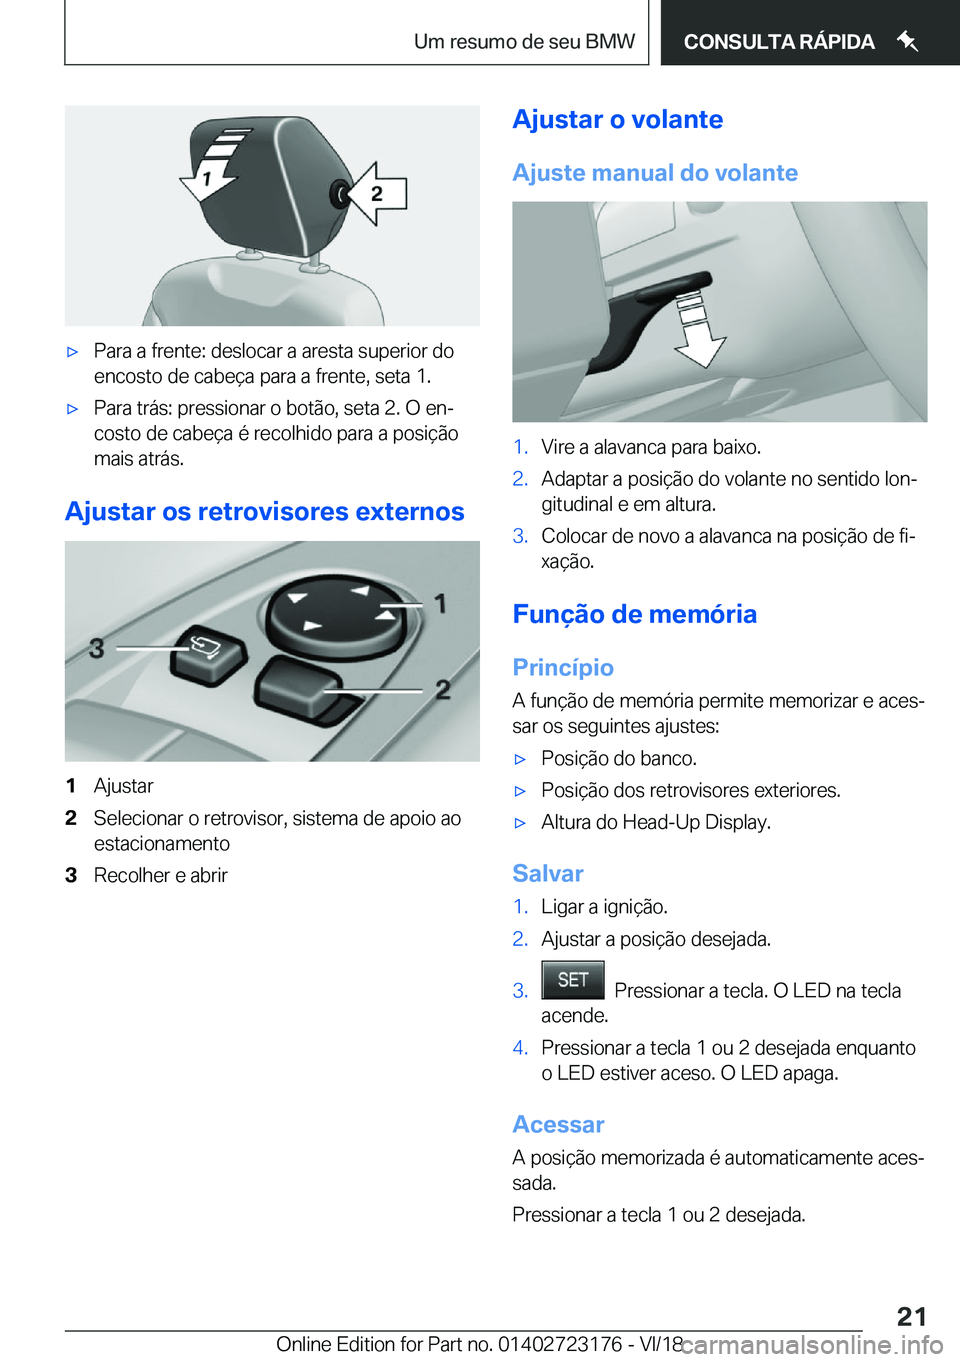 BMW 4 SERIES GRAN COUPE 2019  Manual do condutor (in Portuguese) x�P�a�r�a��a��f�r�e�n�t�e�:��d�e�s�l�o�c�a�r��a��a�r�e�s�t�a��s�u�p�e�r�i�o�r��d�o
�e�n�c�o�s�t�o��d�e��c�a�b�e�